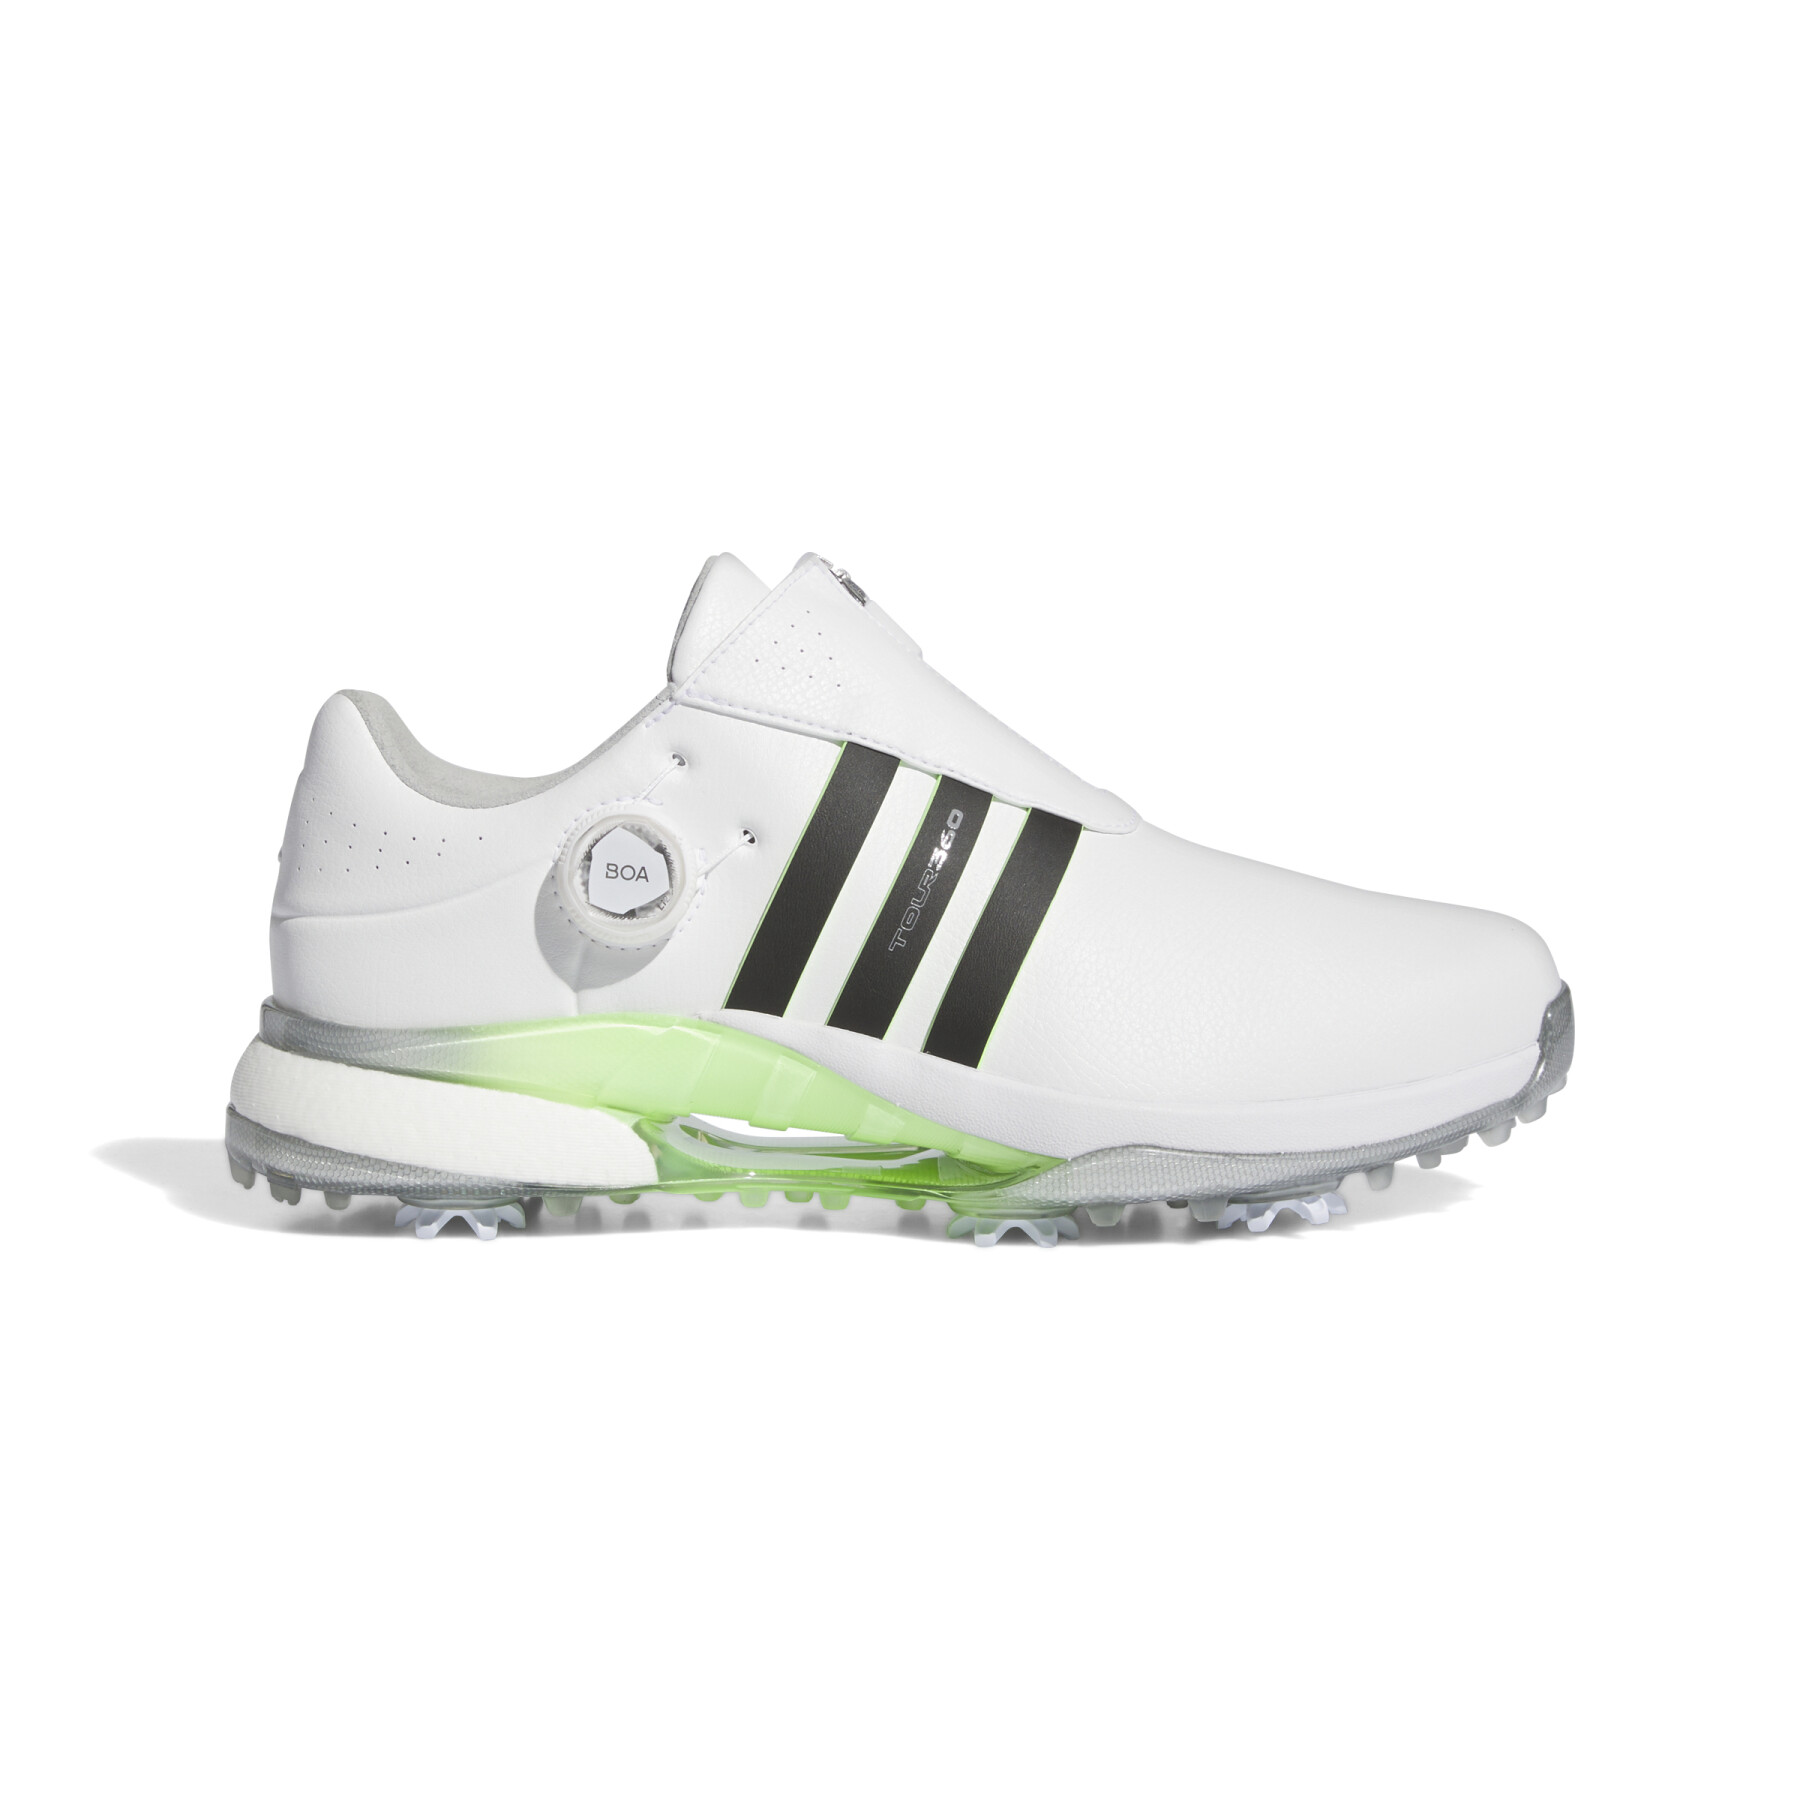 Chaussures de golf avec crampons adidas Bozon Adibreak